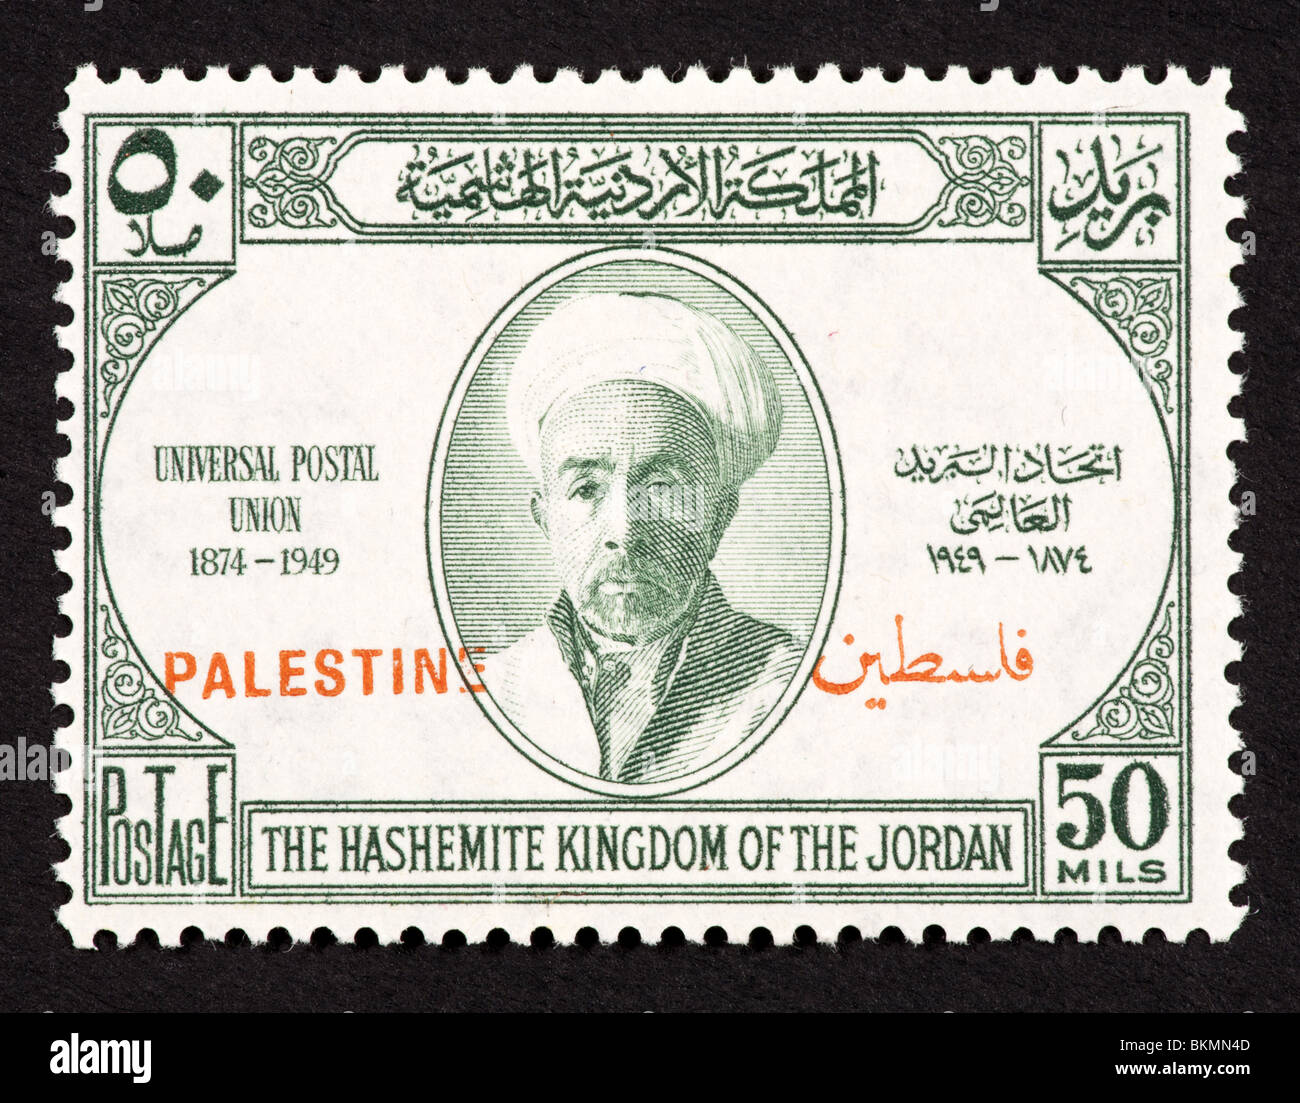 postage-stamp-from-jordan-depicting-king-abdullah-ibn-hussein-for-BKMN4D.jpg